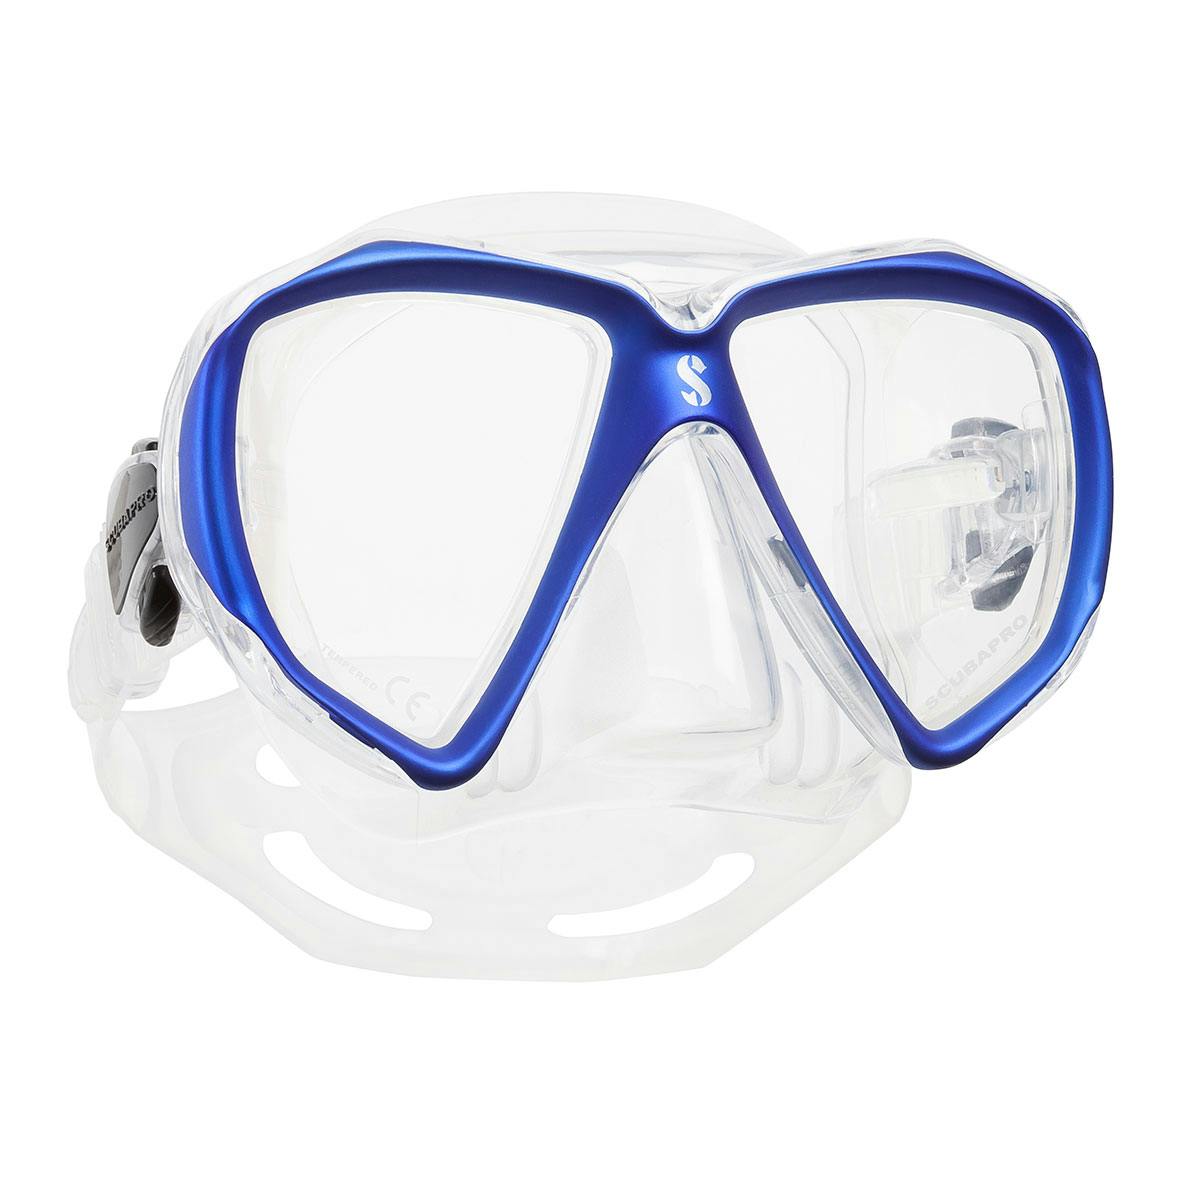 ScubaPro Spectra Mask, Two Lens - Clear/Blue